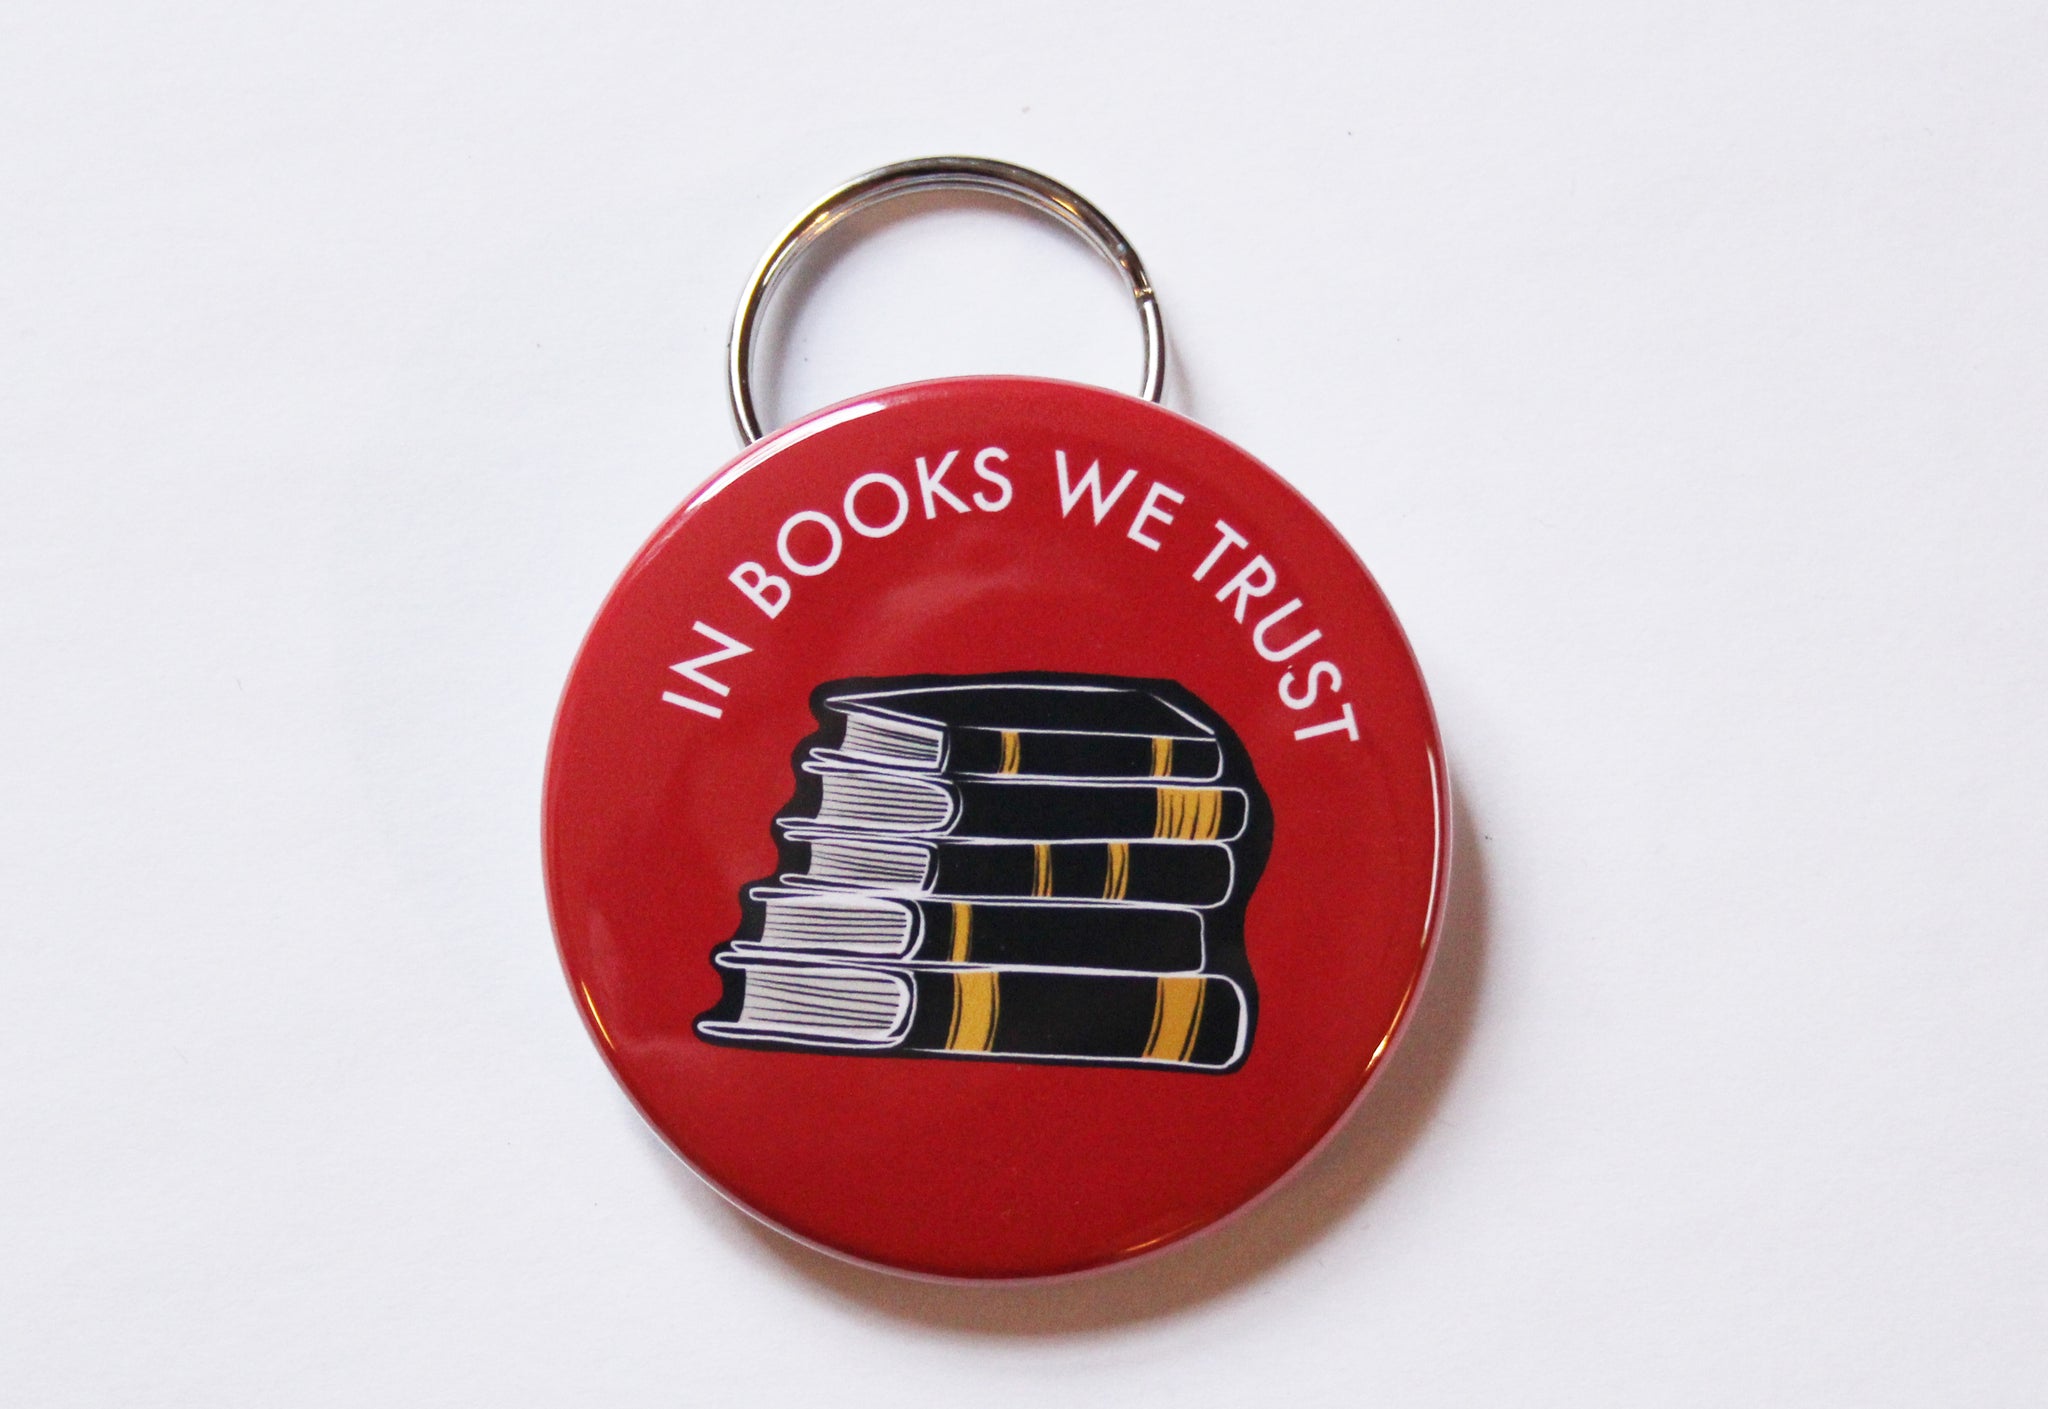 In Books We Trust Keychain Bottle Opener